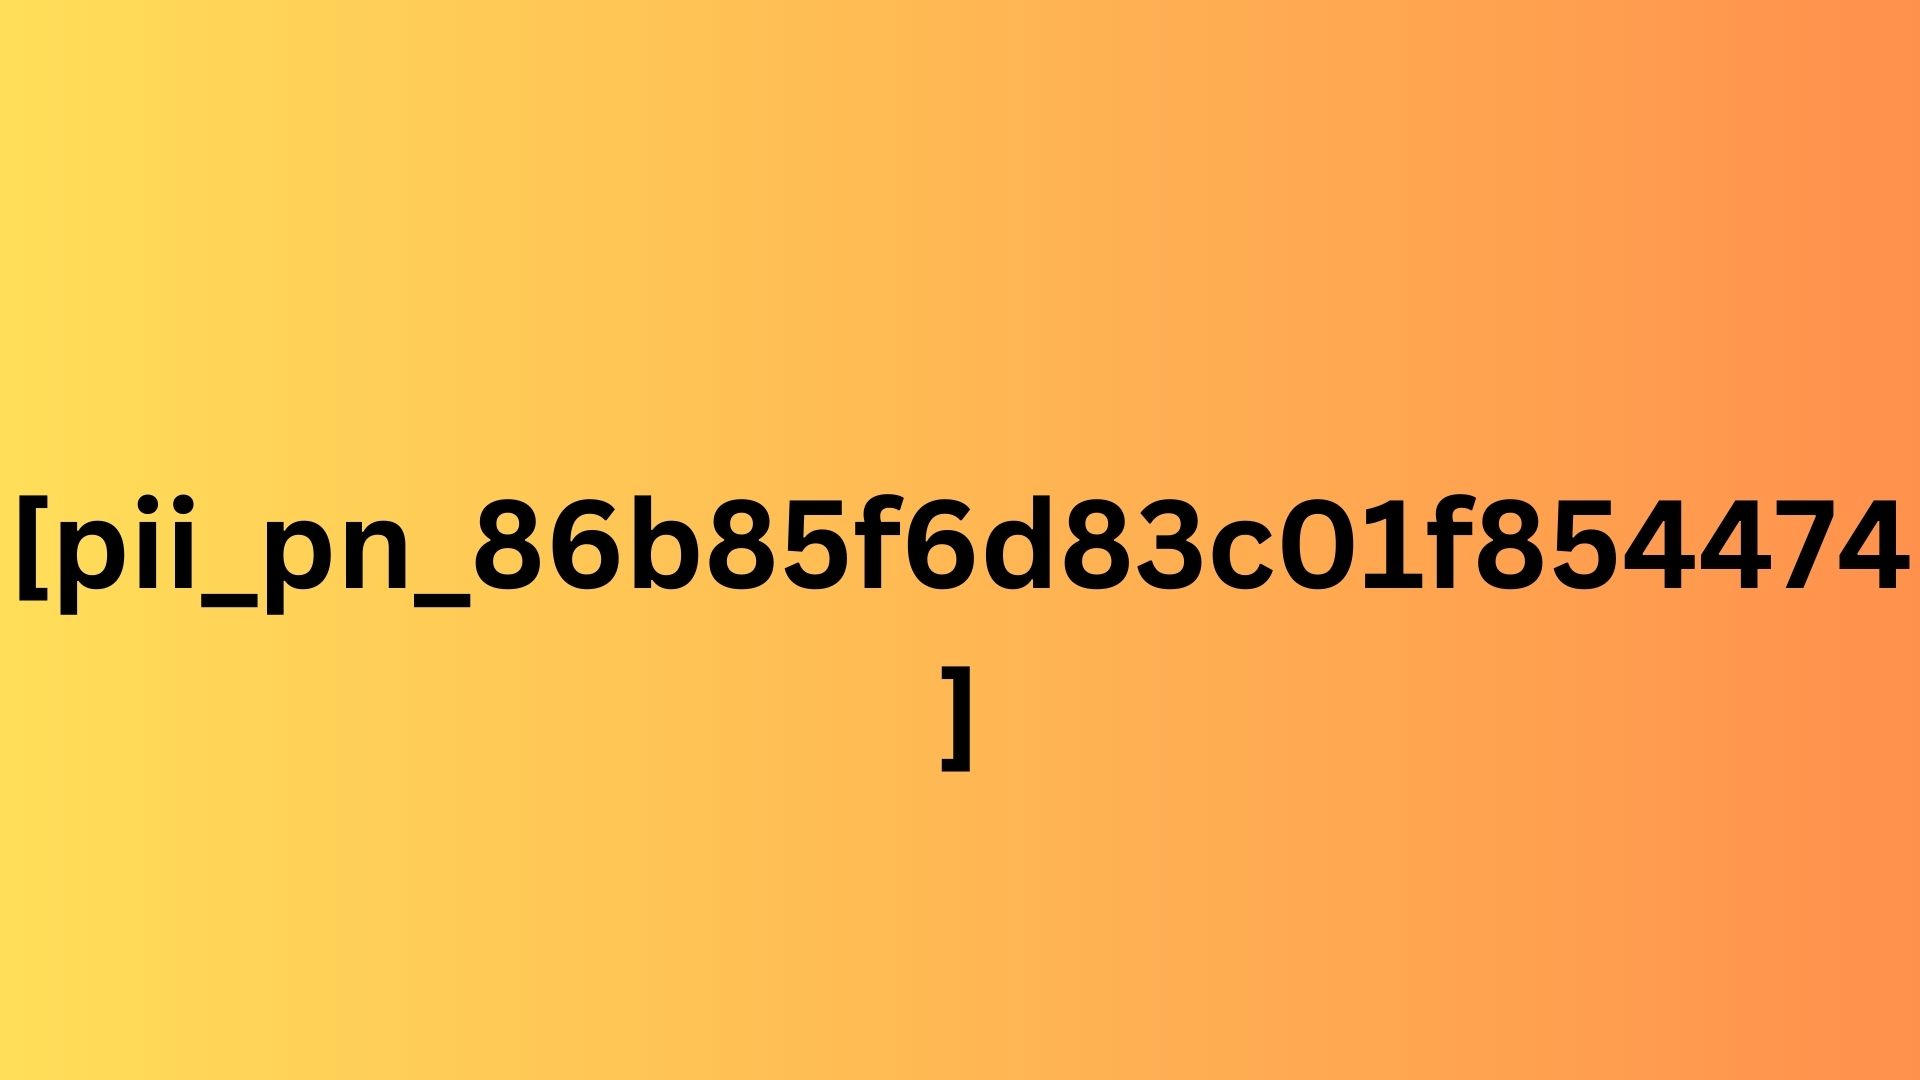 How to solve [pii_pn_86b85f6d83c01f854474] error code